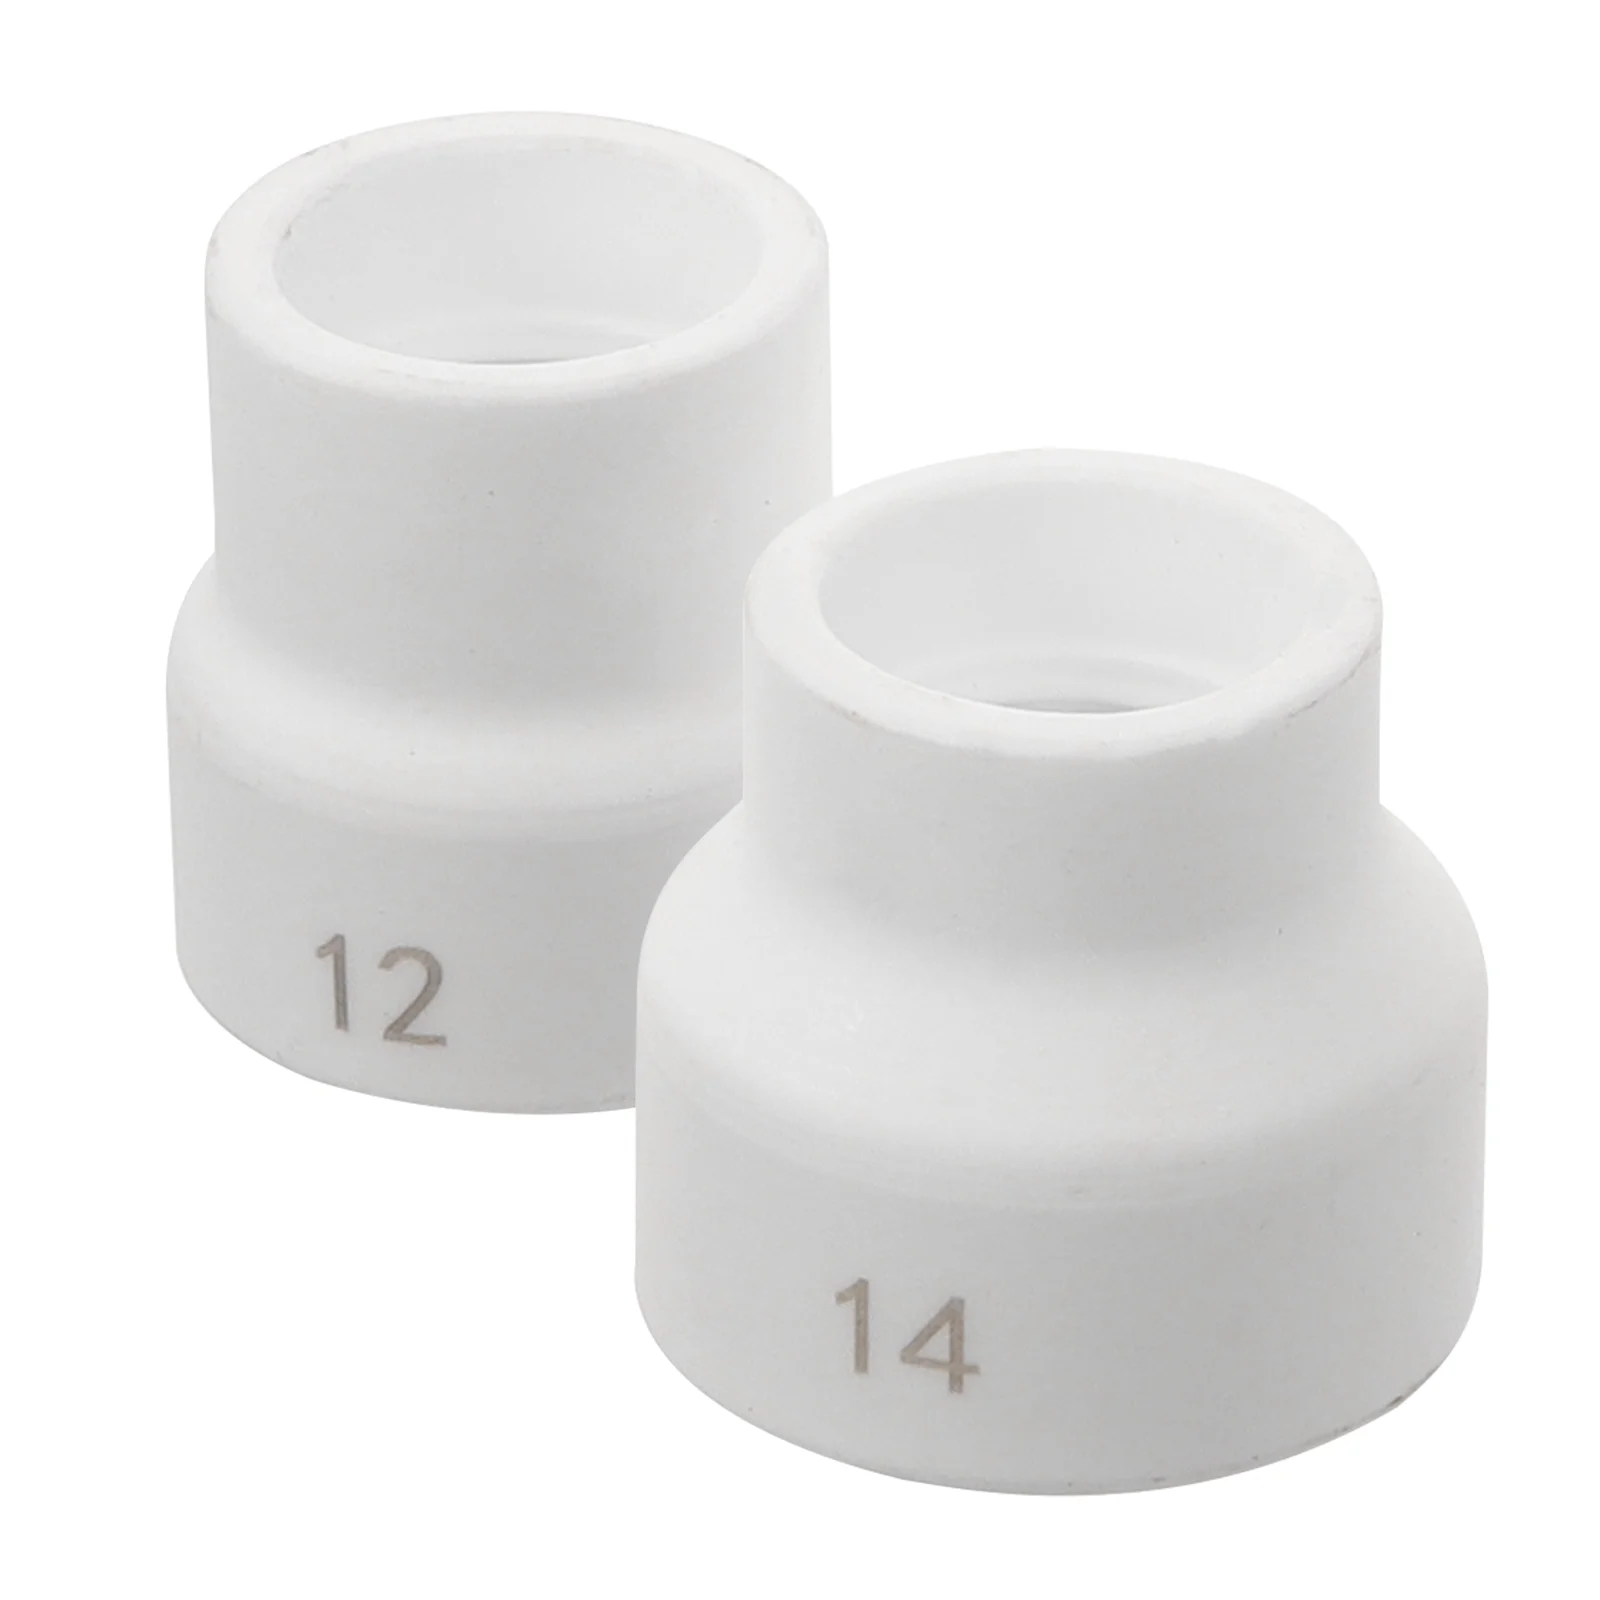 

2 Pcs Welding Accessories Tig Ceramic Cup Shield Torch Lens Cups Solder Gas Nozzle